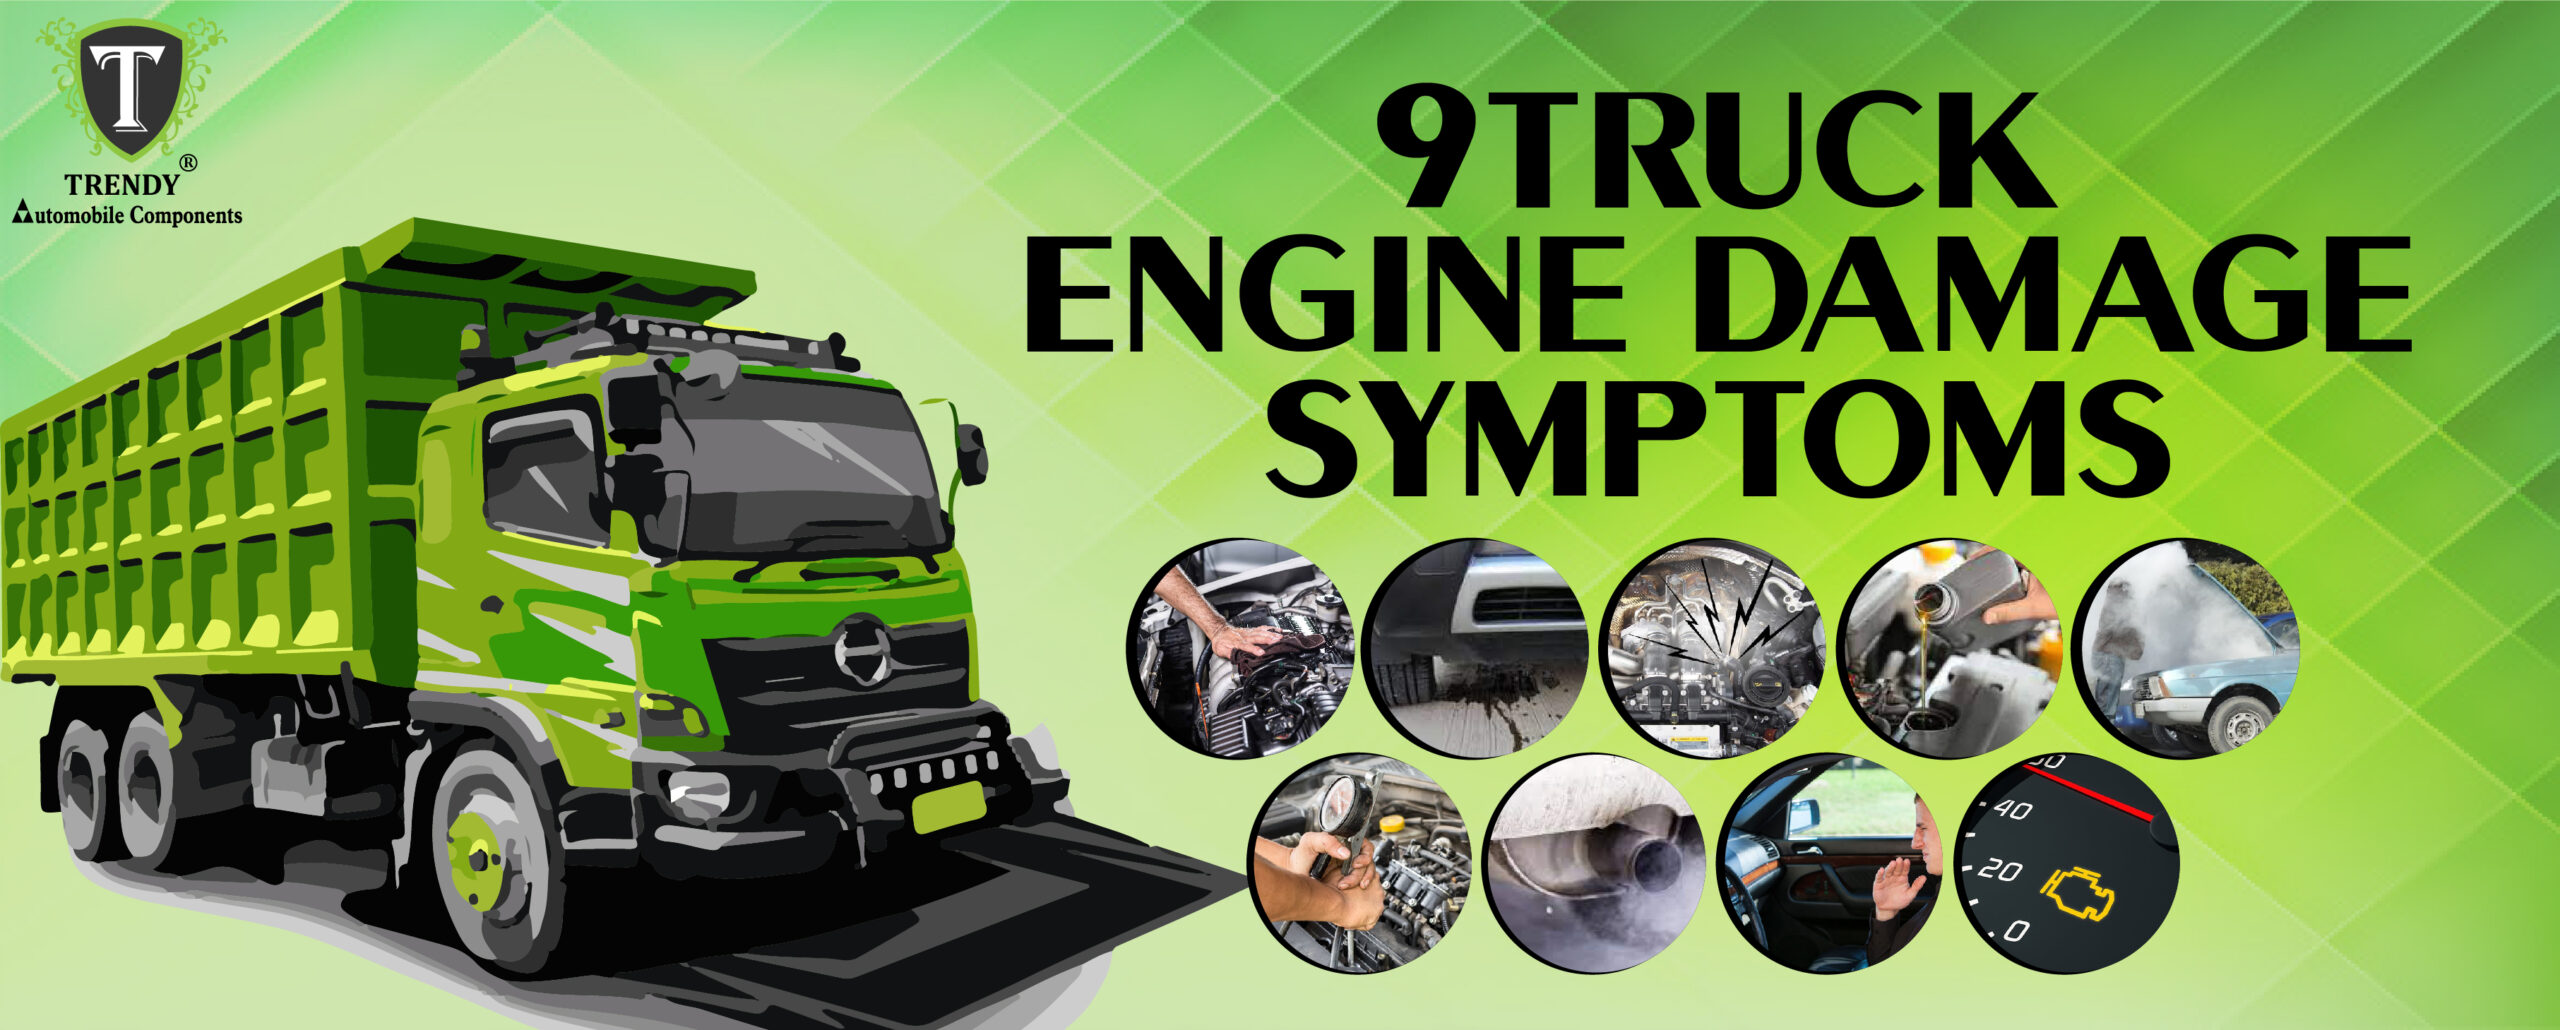 9-Truck-Engine-Damage-Symptoms-scaled